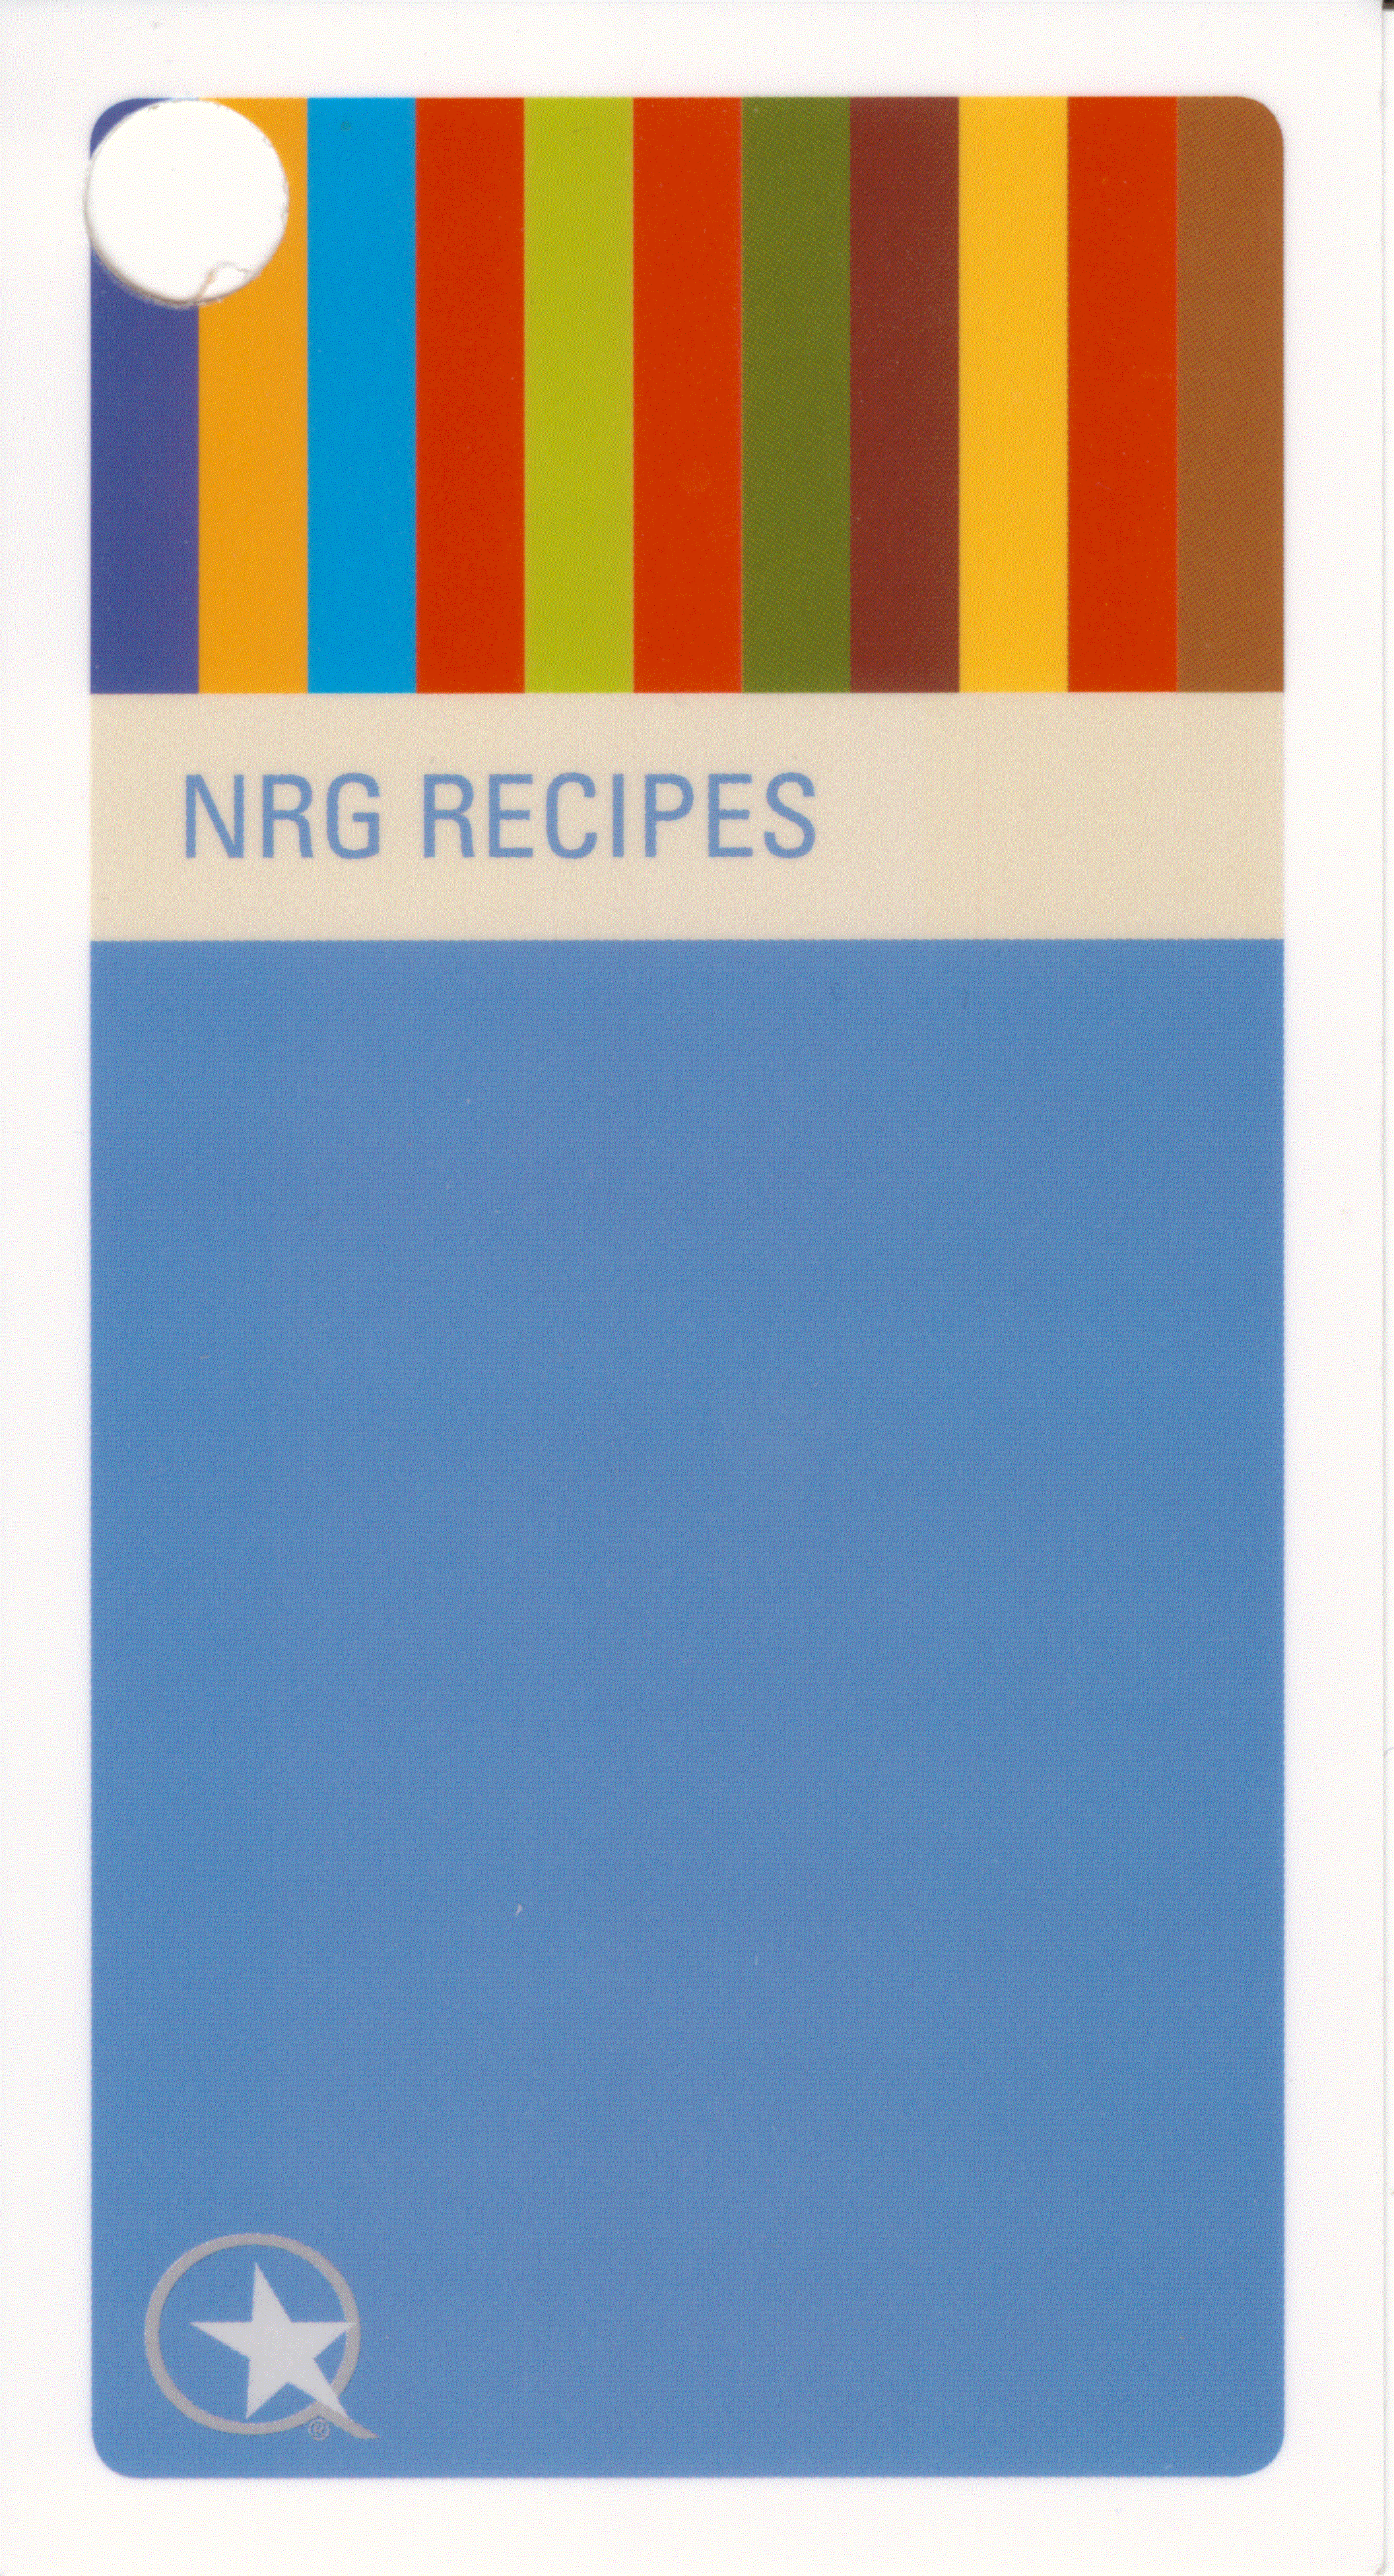 NRG RECIPES.gif (2863015 bytes)